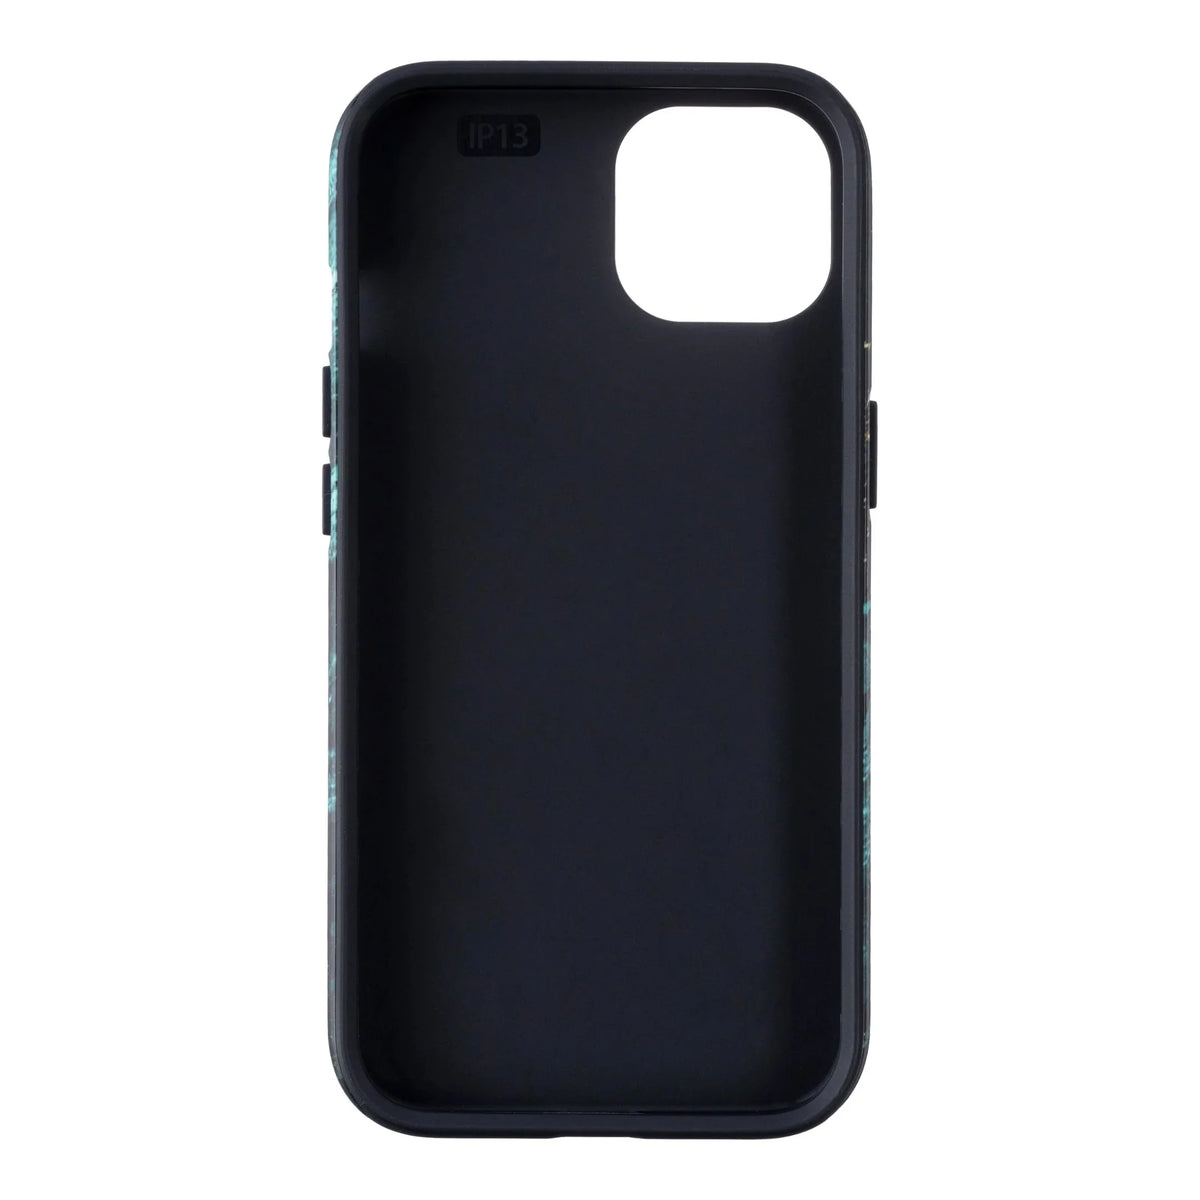 Azure iPhone Case - iPhone 12 Pro